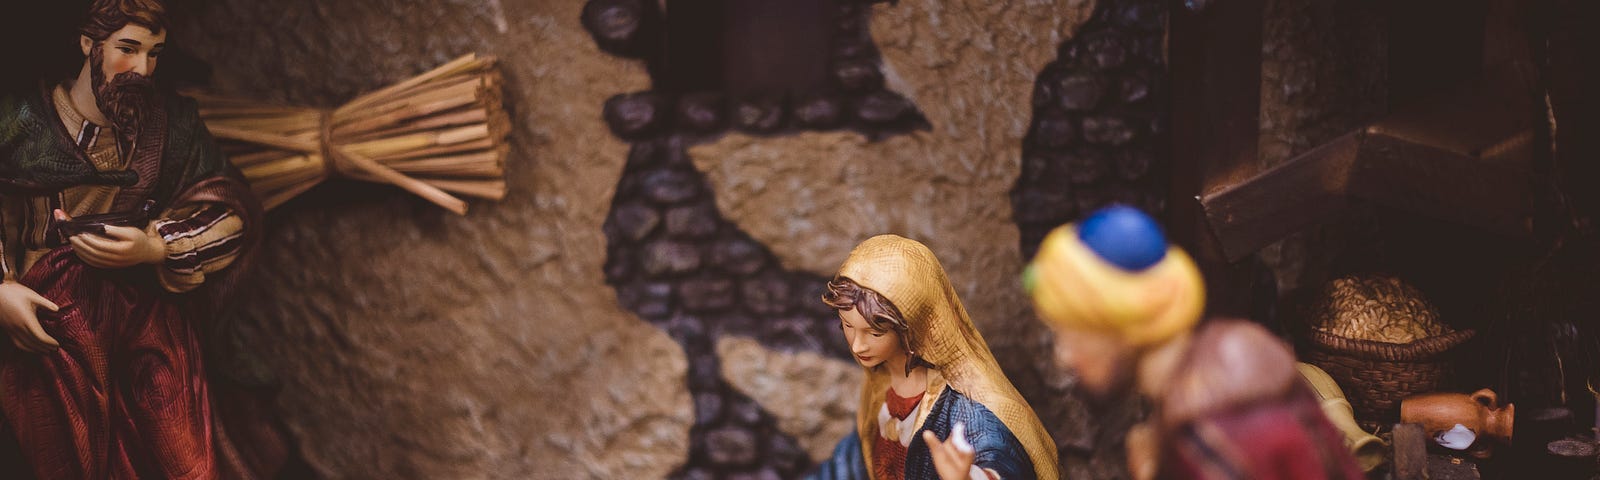 A traditional figurine nativity scene